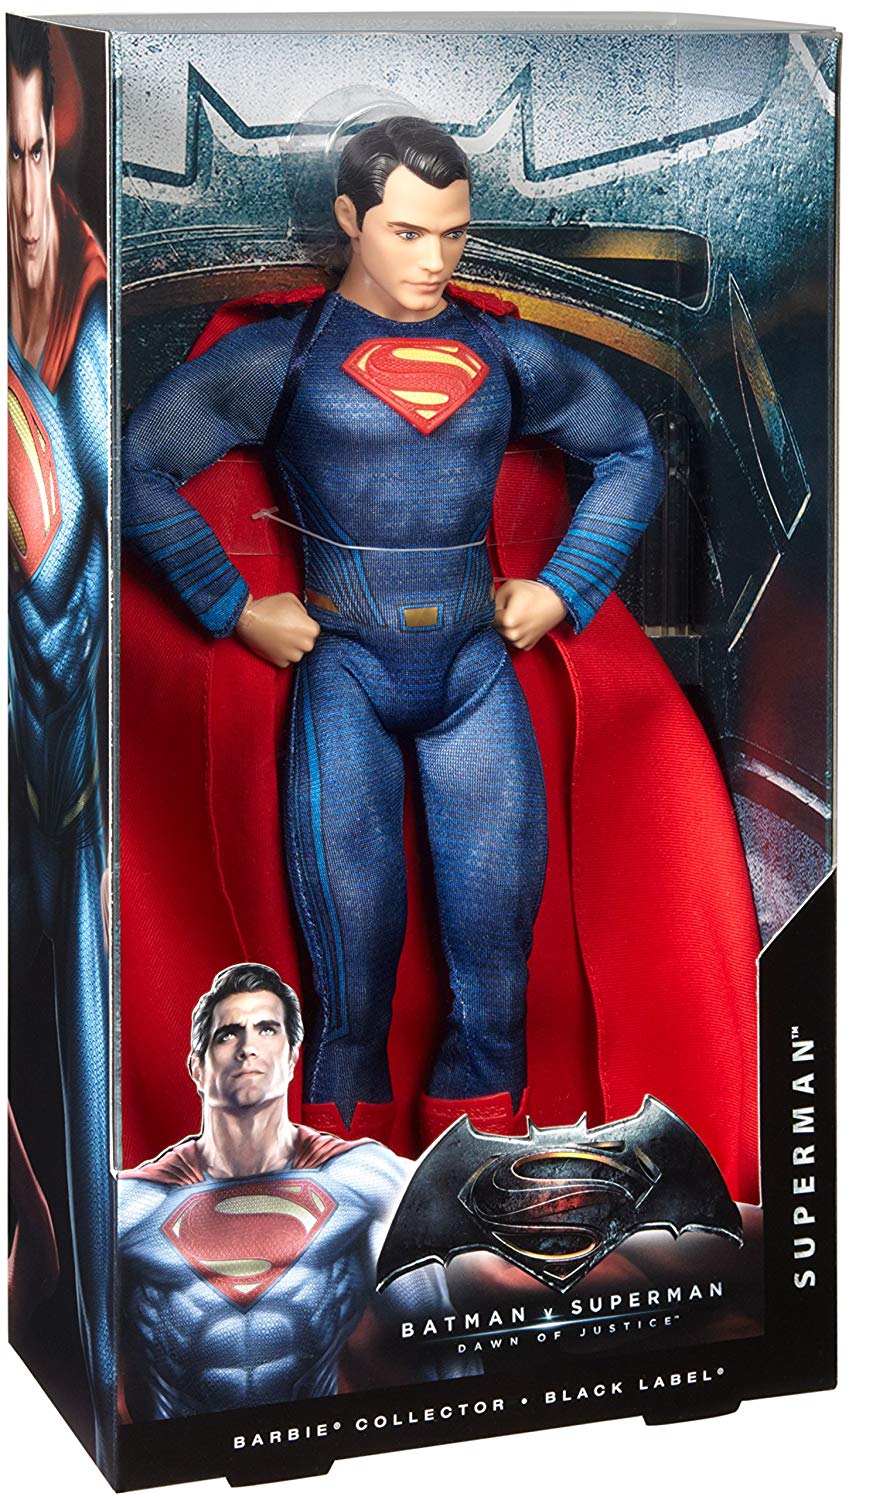 Batman v Superman Dawn of Justice Figurine - oddgifts.com